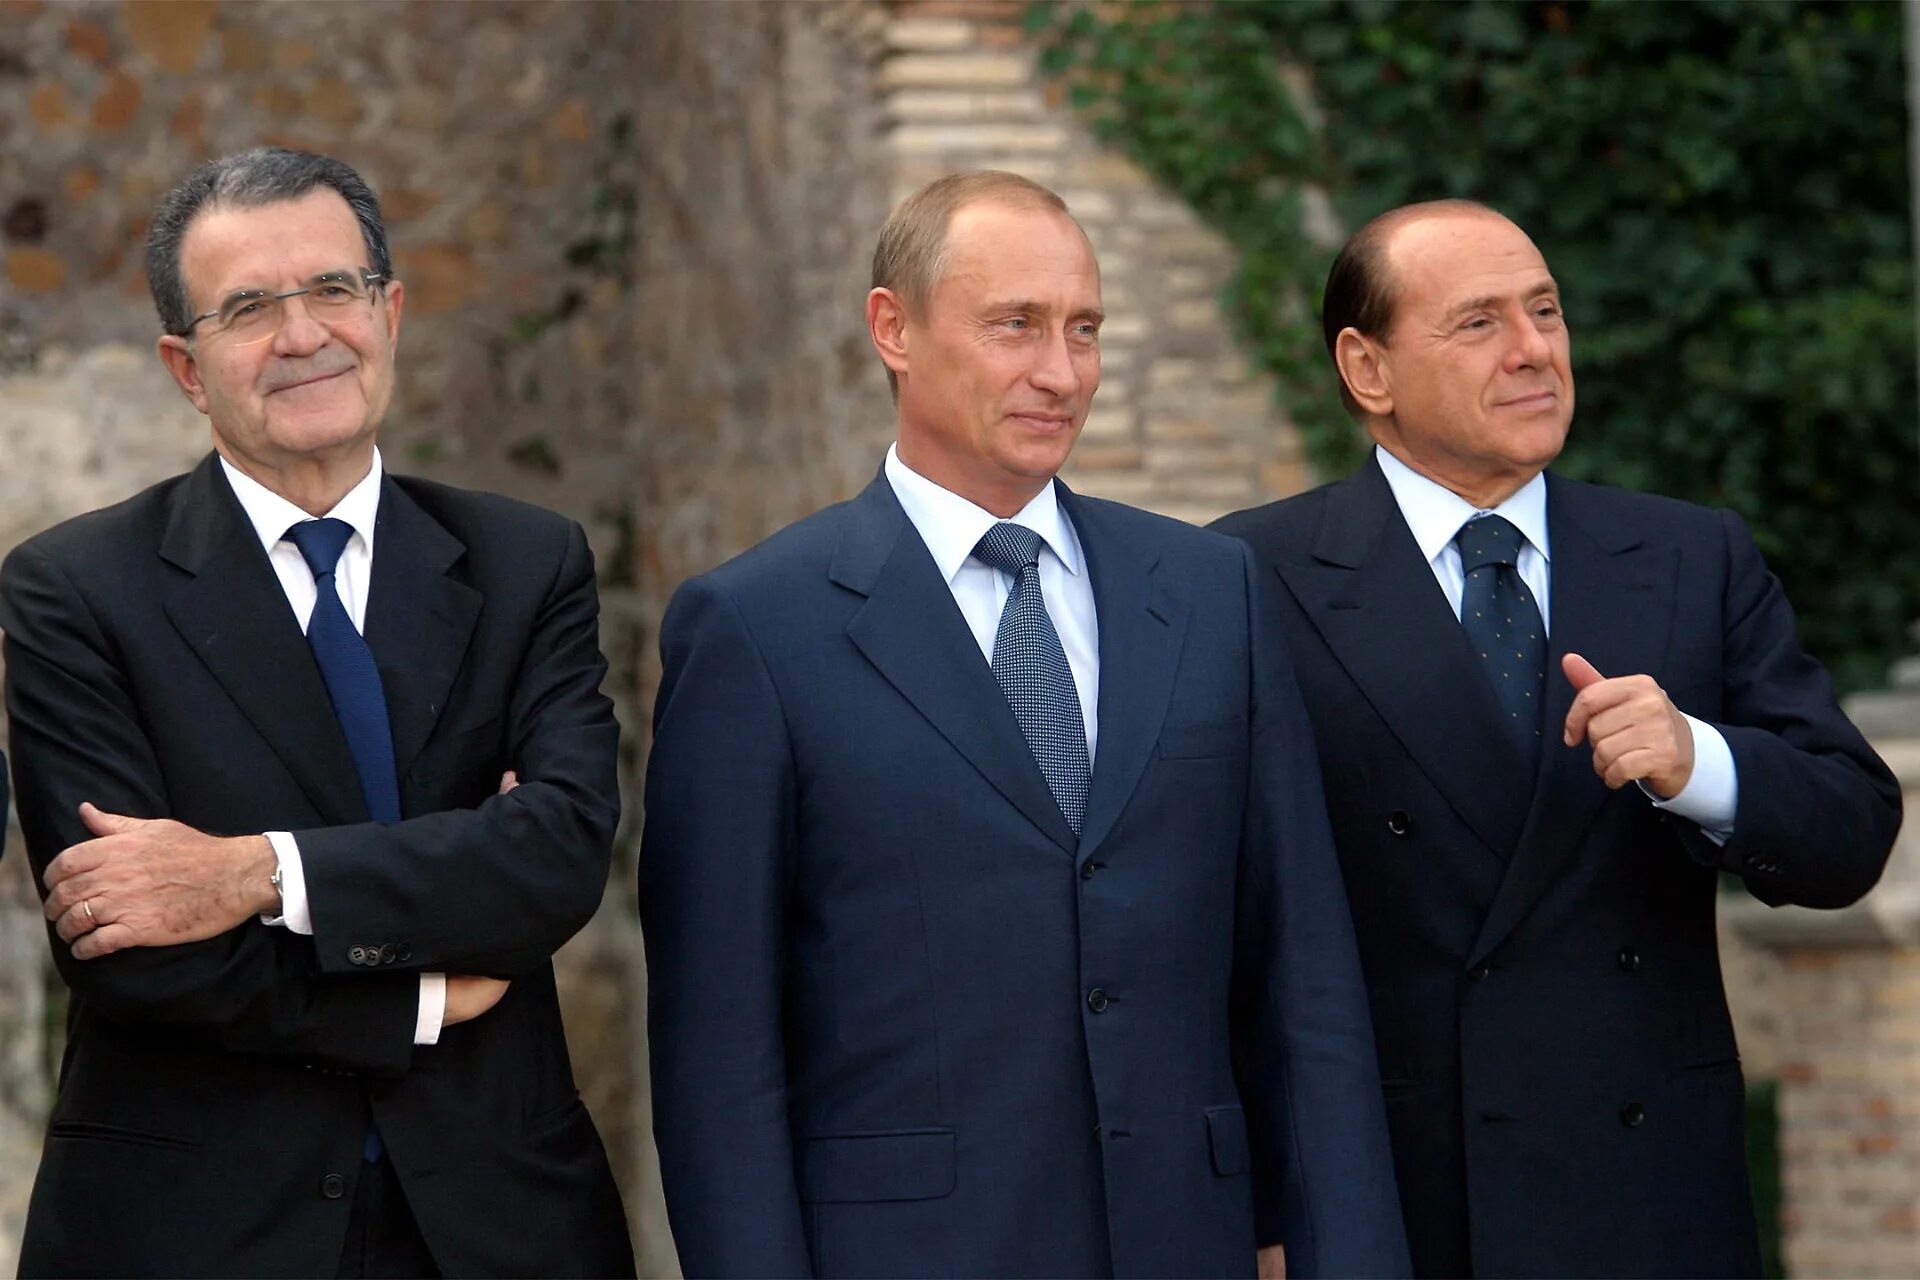 Имя берлускони 7 букв. Сильвио Берлускони рост. Berlusconi с Путиным. Сильвио Берлускони рост рост.